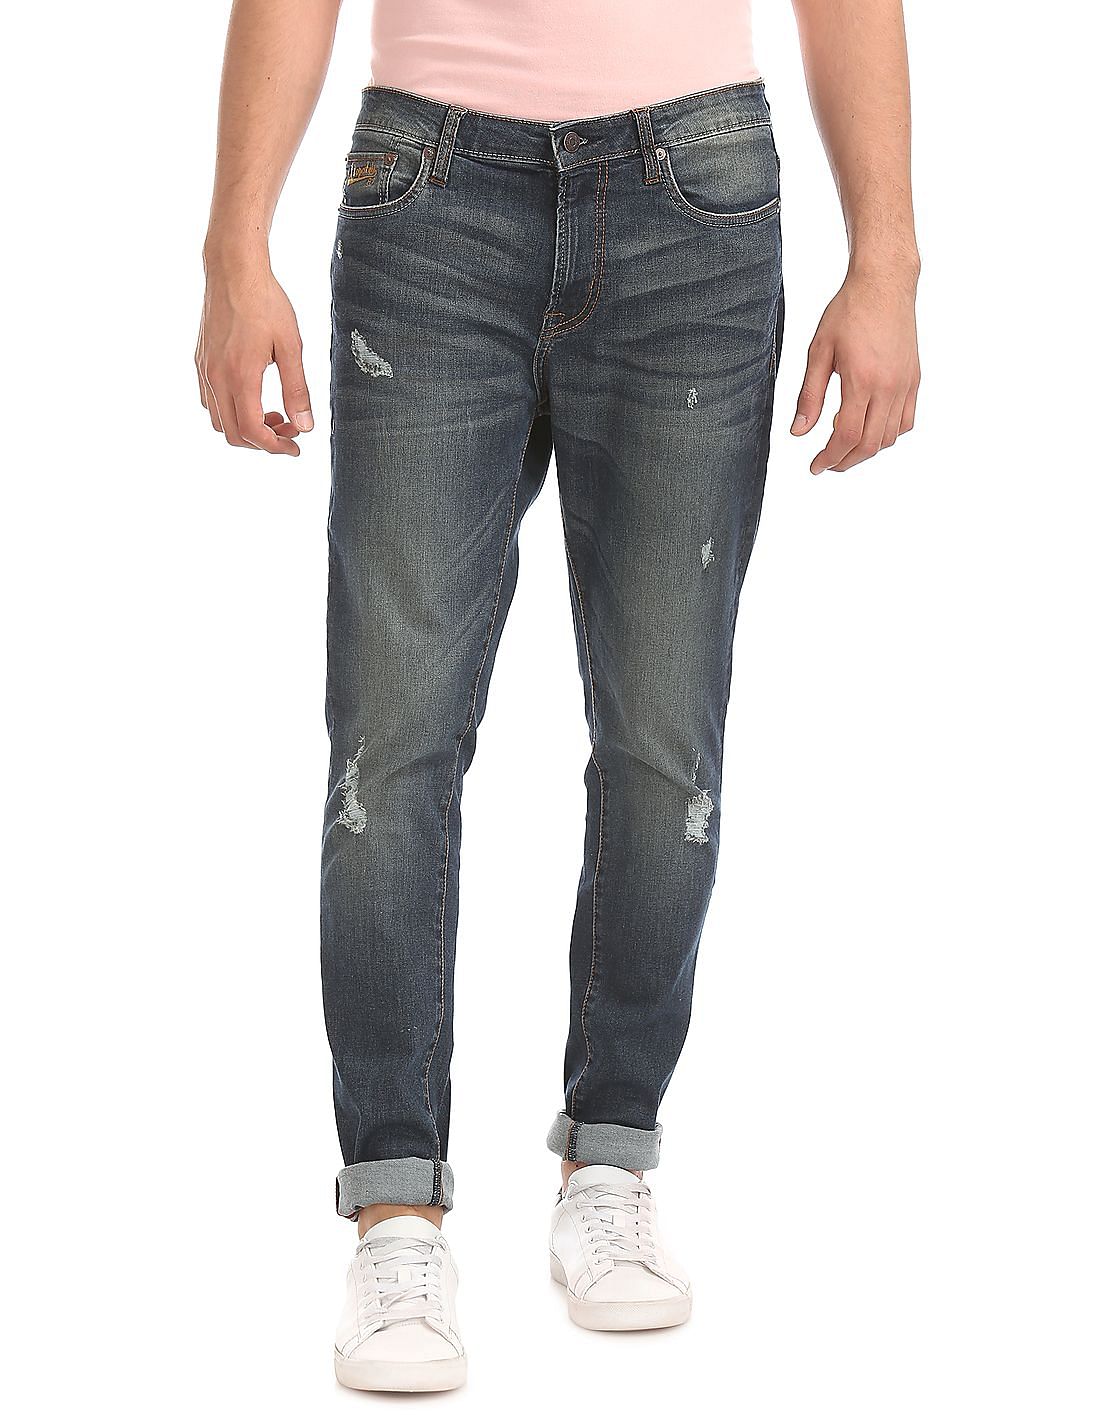 Buy Aeropostale Super Skinny Fit Distressed Jeans - NNNOW.com